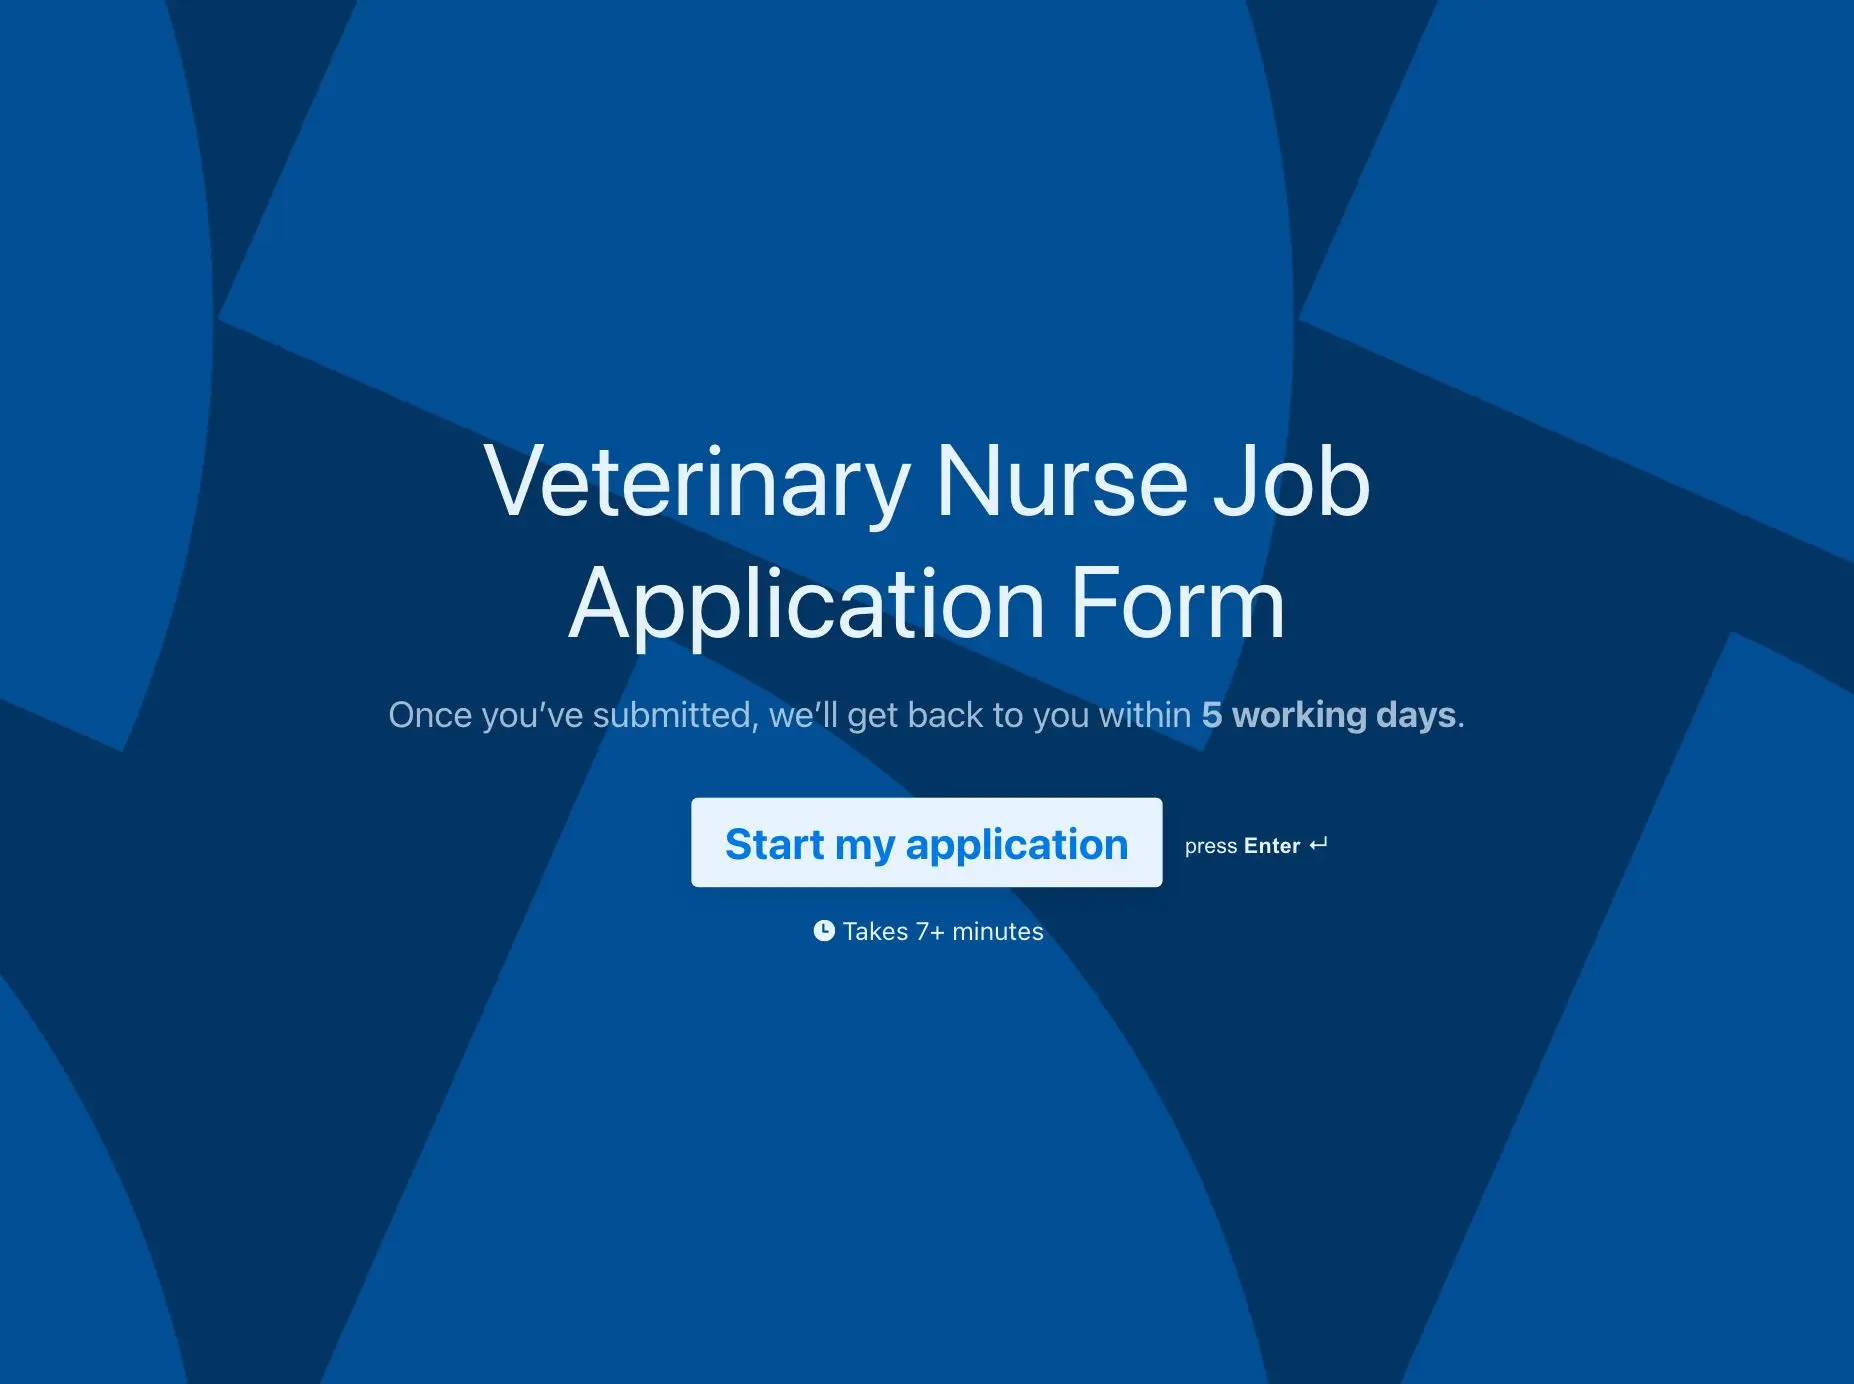 Veterinary Nurse Job Application Form Template Hero